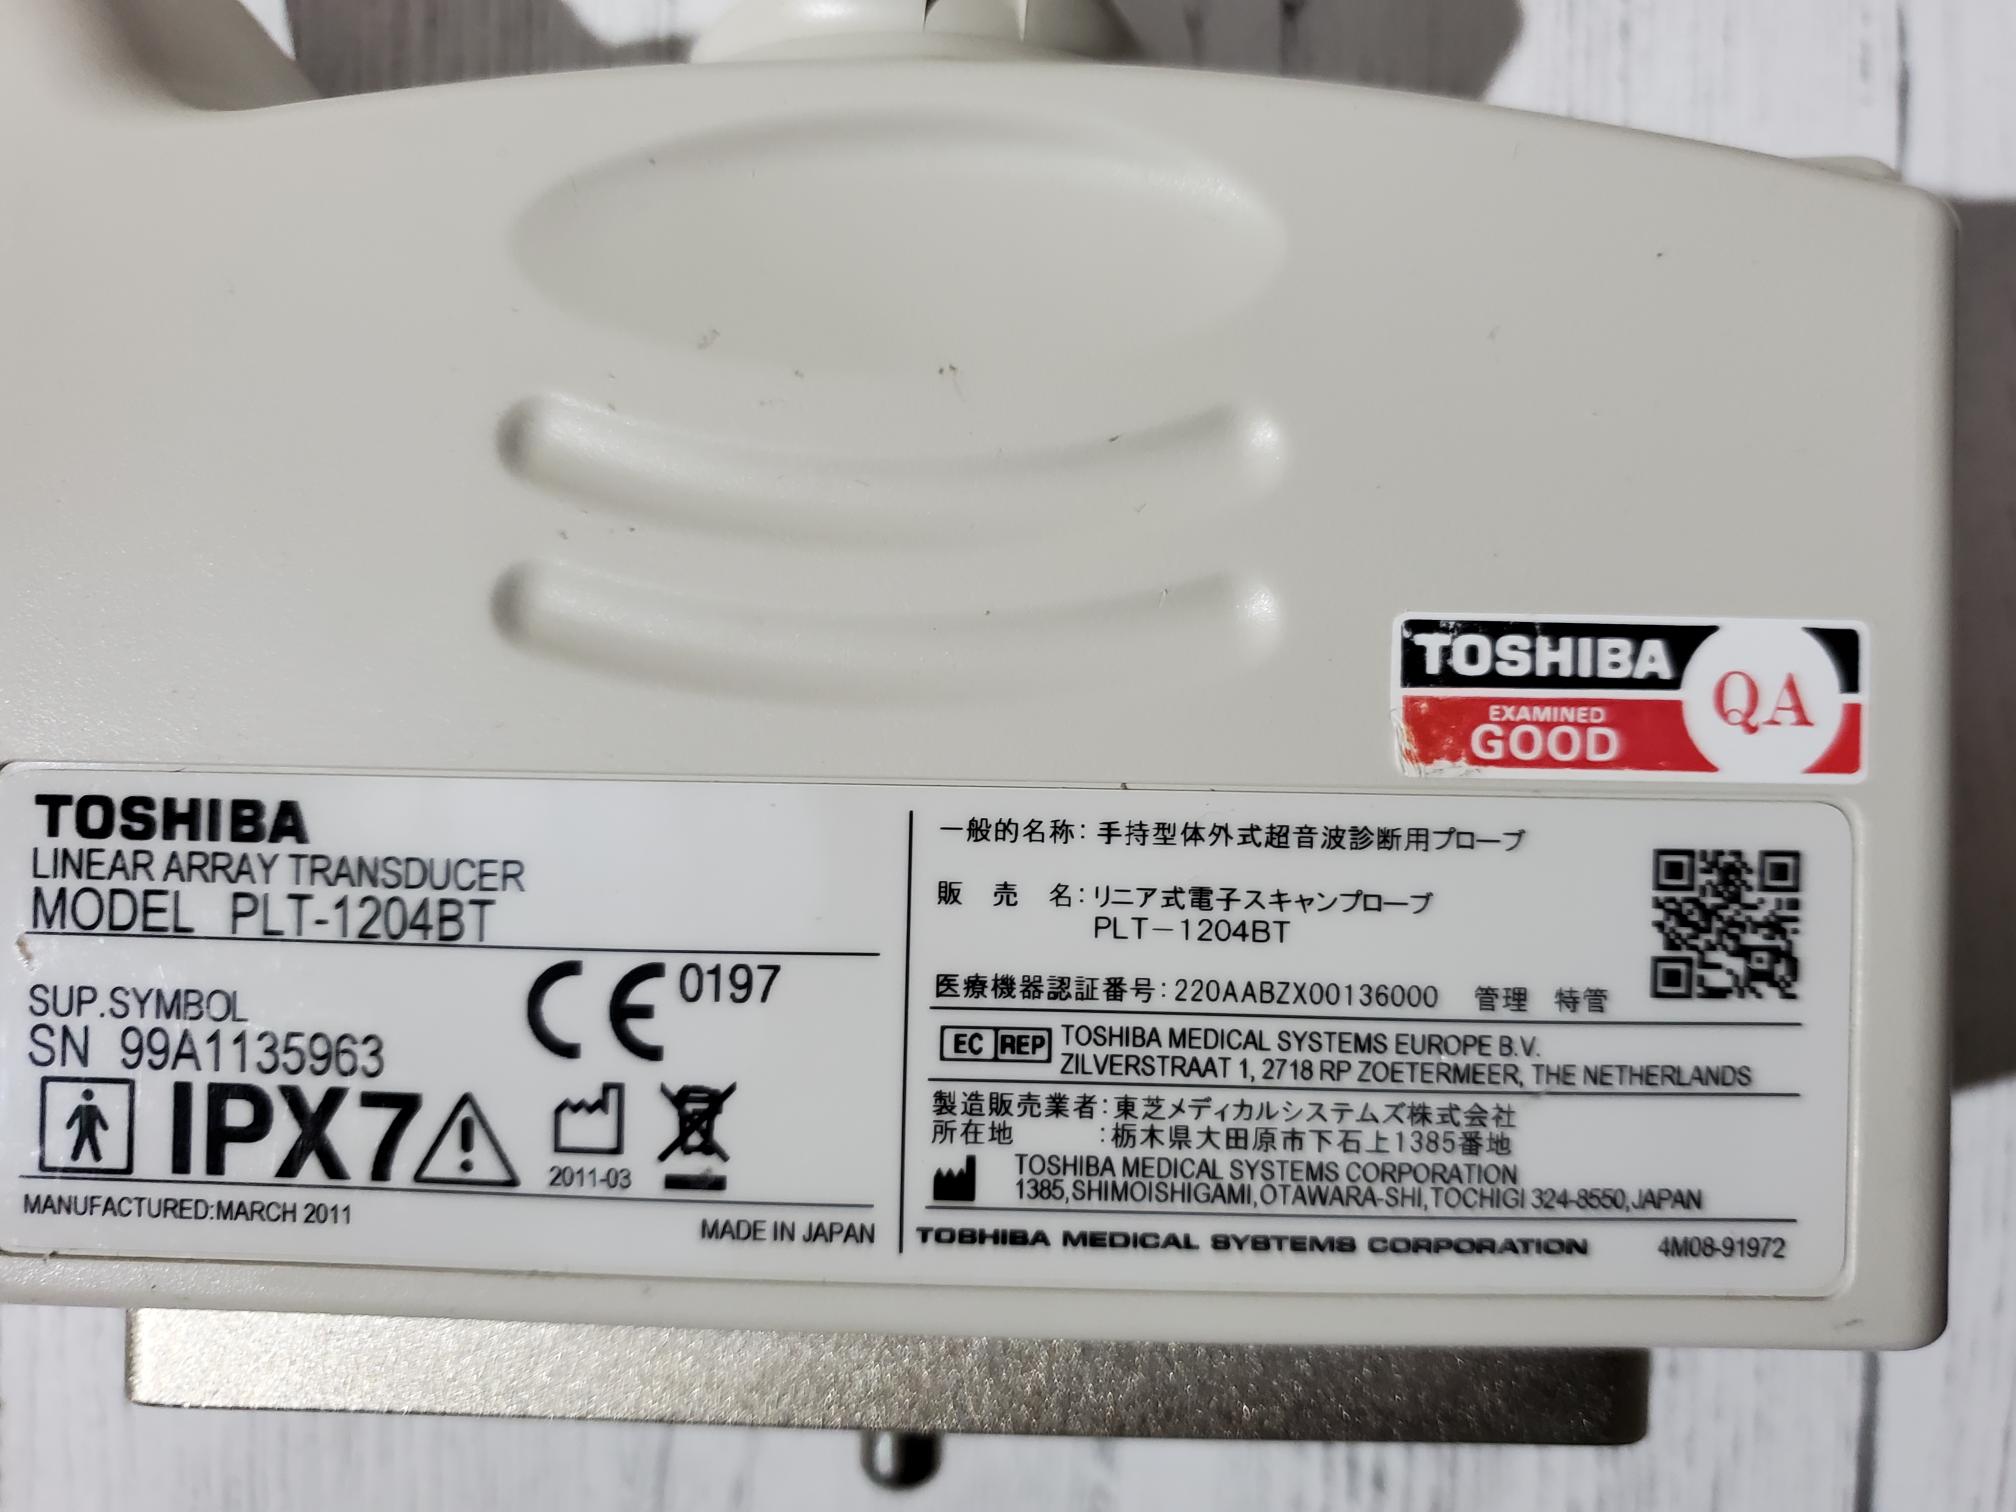 Toshiba PLT-1204BT ULTRASOUND PROBE DIAGNOSTIC ULTRASOUND MACHINES FOR SALE